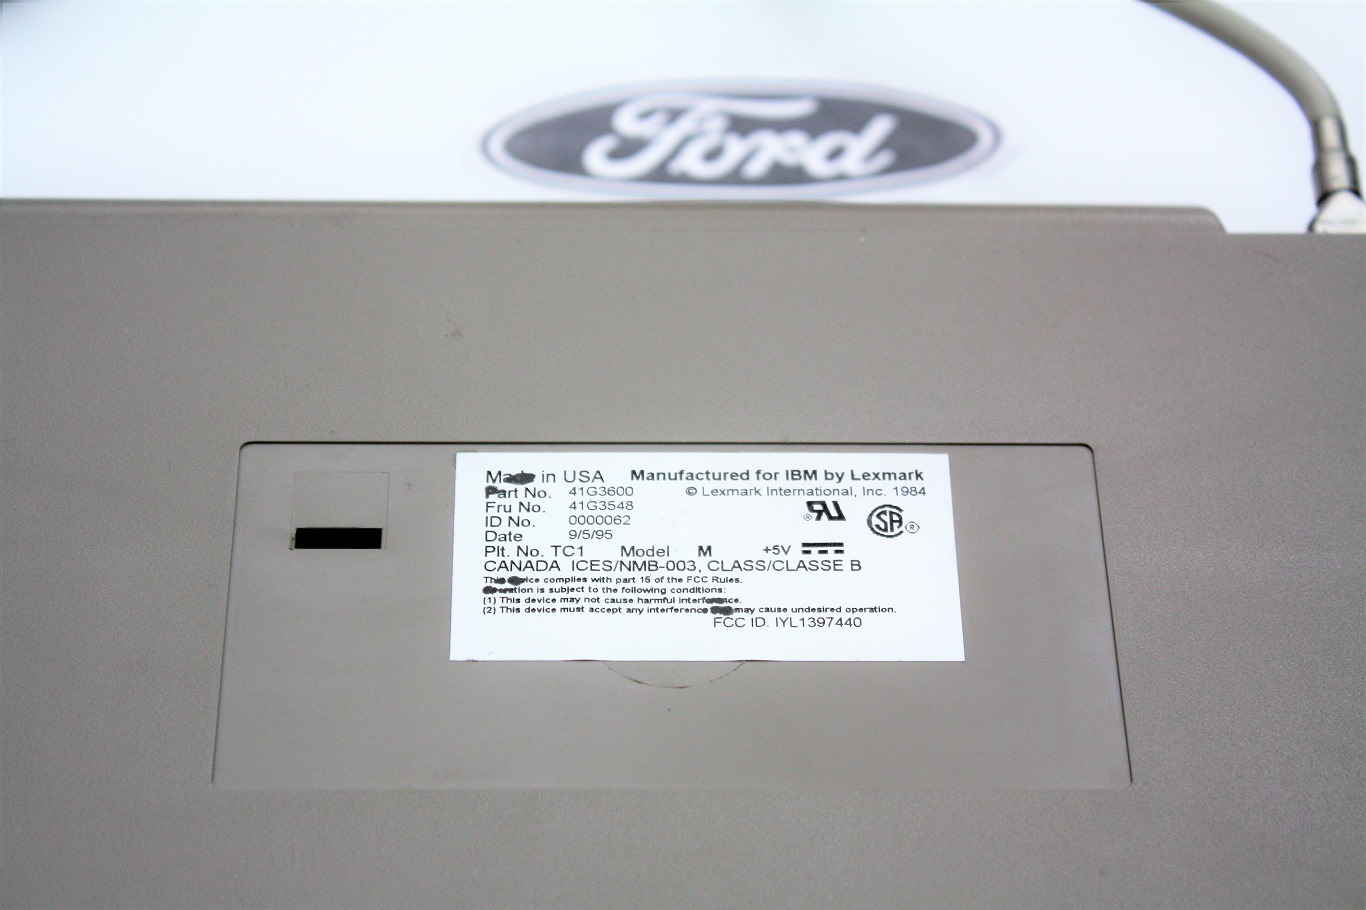 IBM INDY SSK - Ford Lexmark 41G3600 rear label